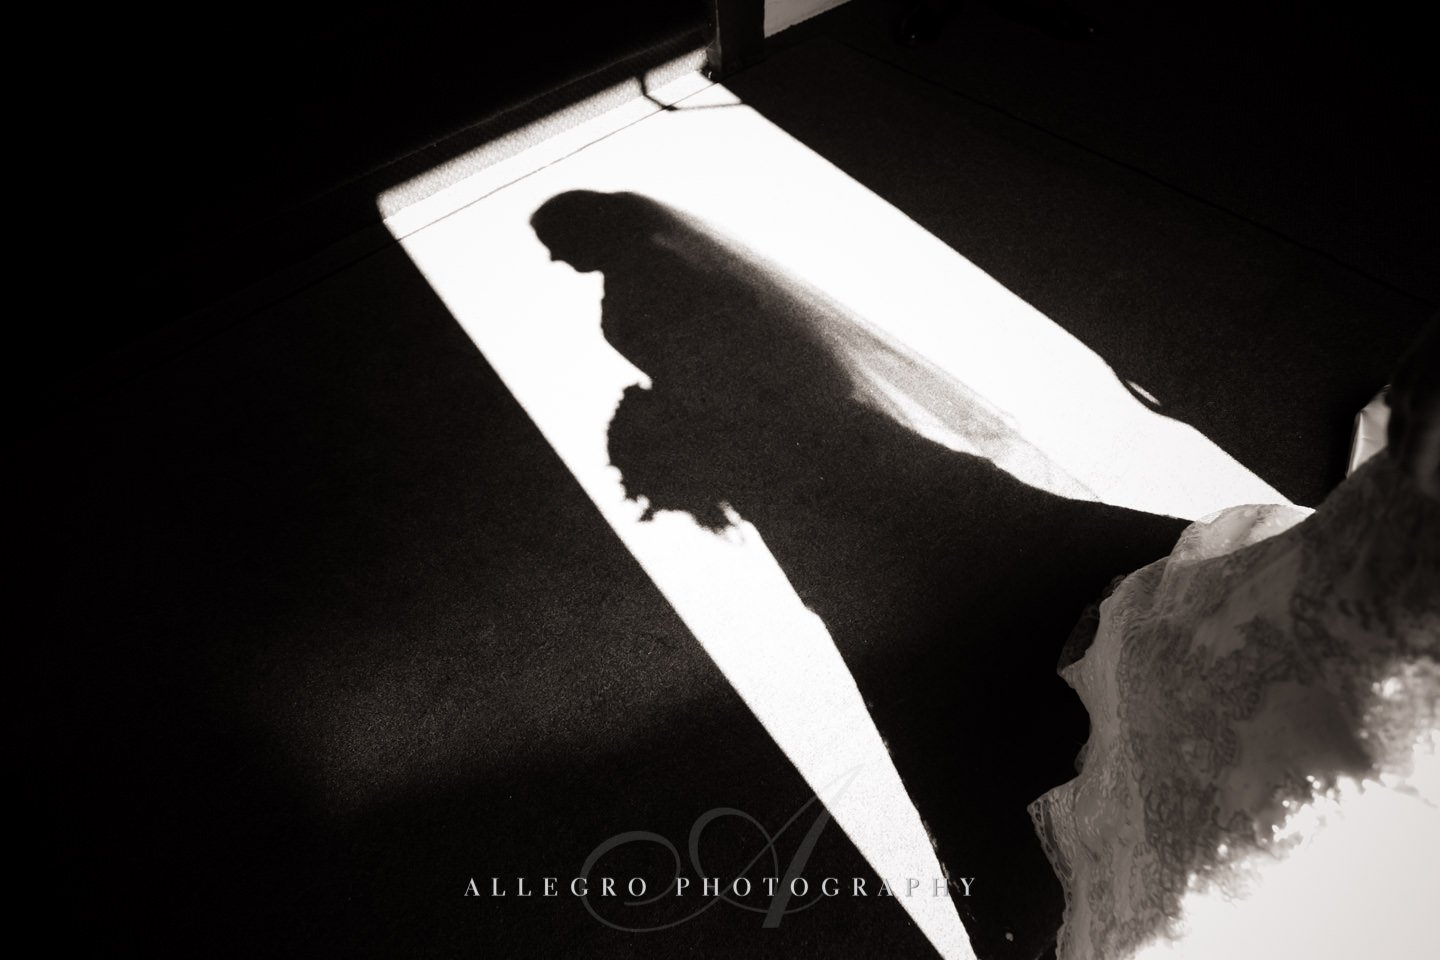 bride at door shadow- ceremony begins - photo by allegro photography